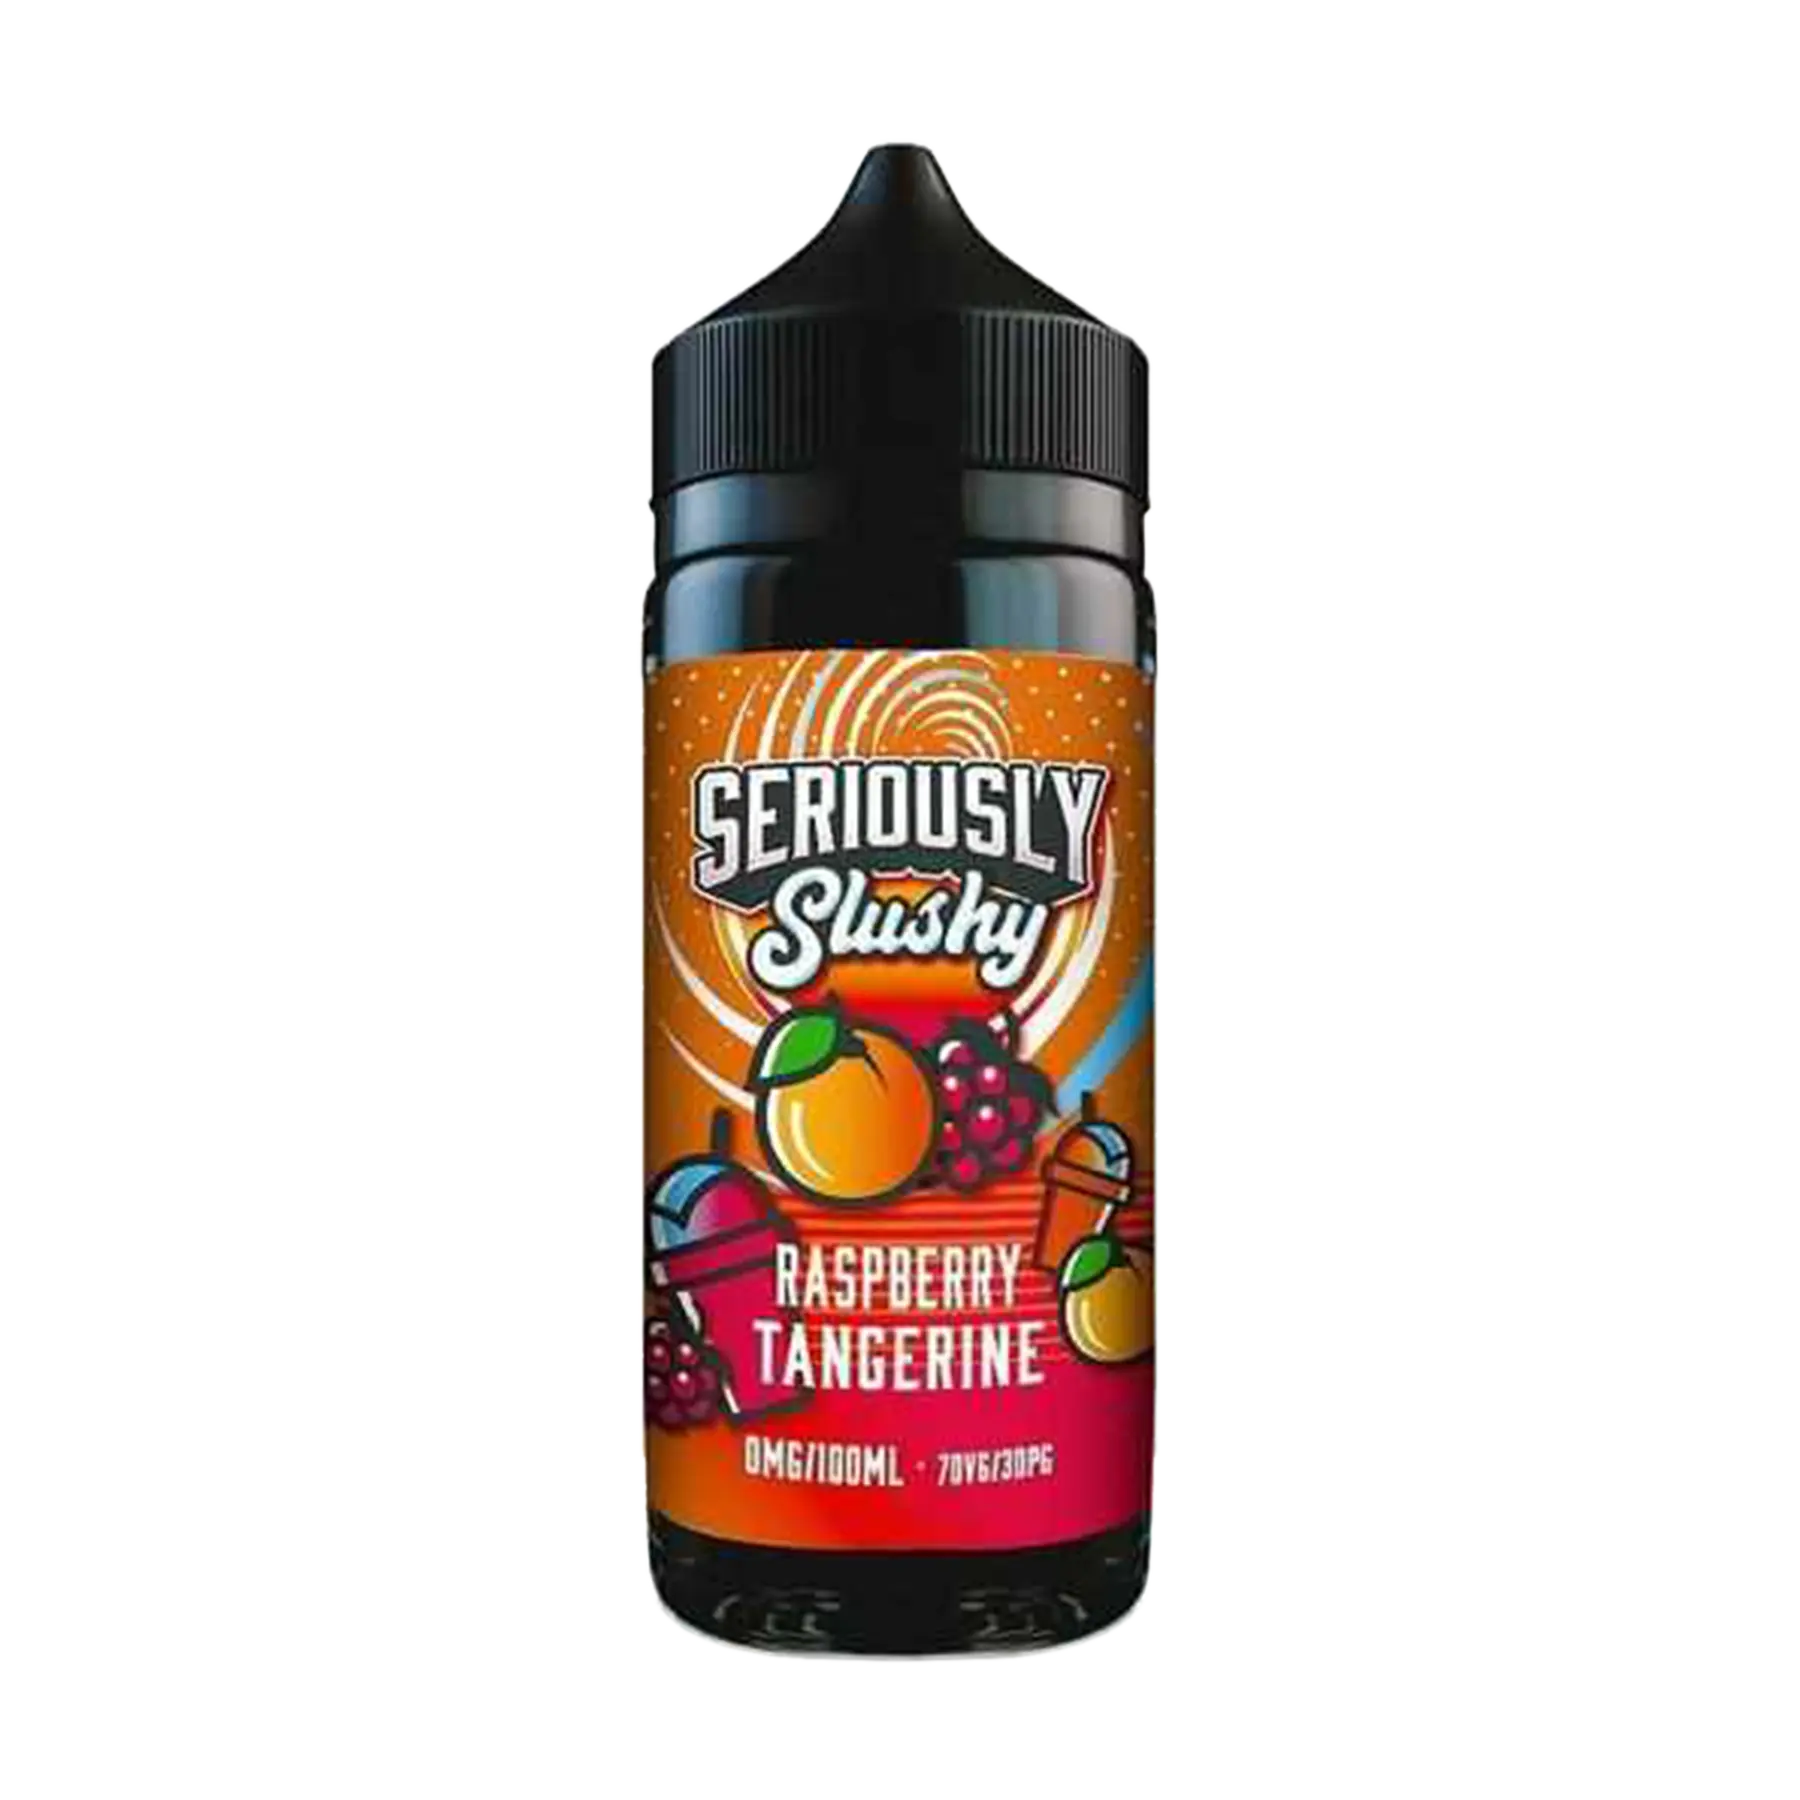 Doozy Seriously Slushy Raspberry Tangerine 100ml E Liquid Shortfill